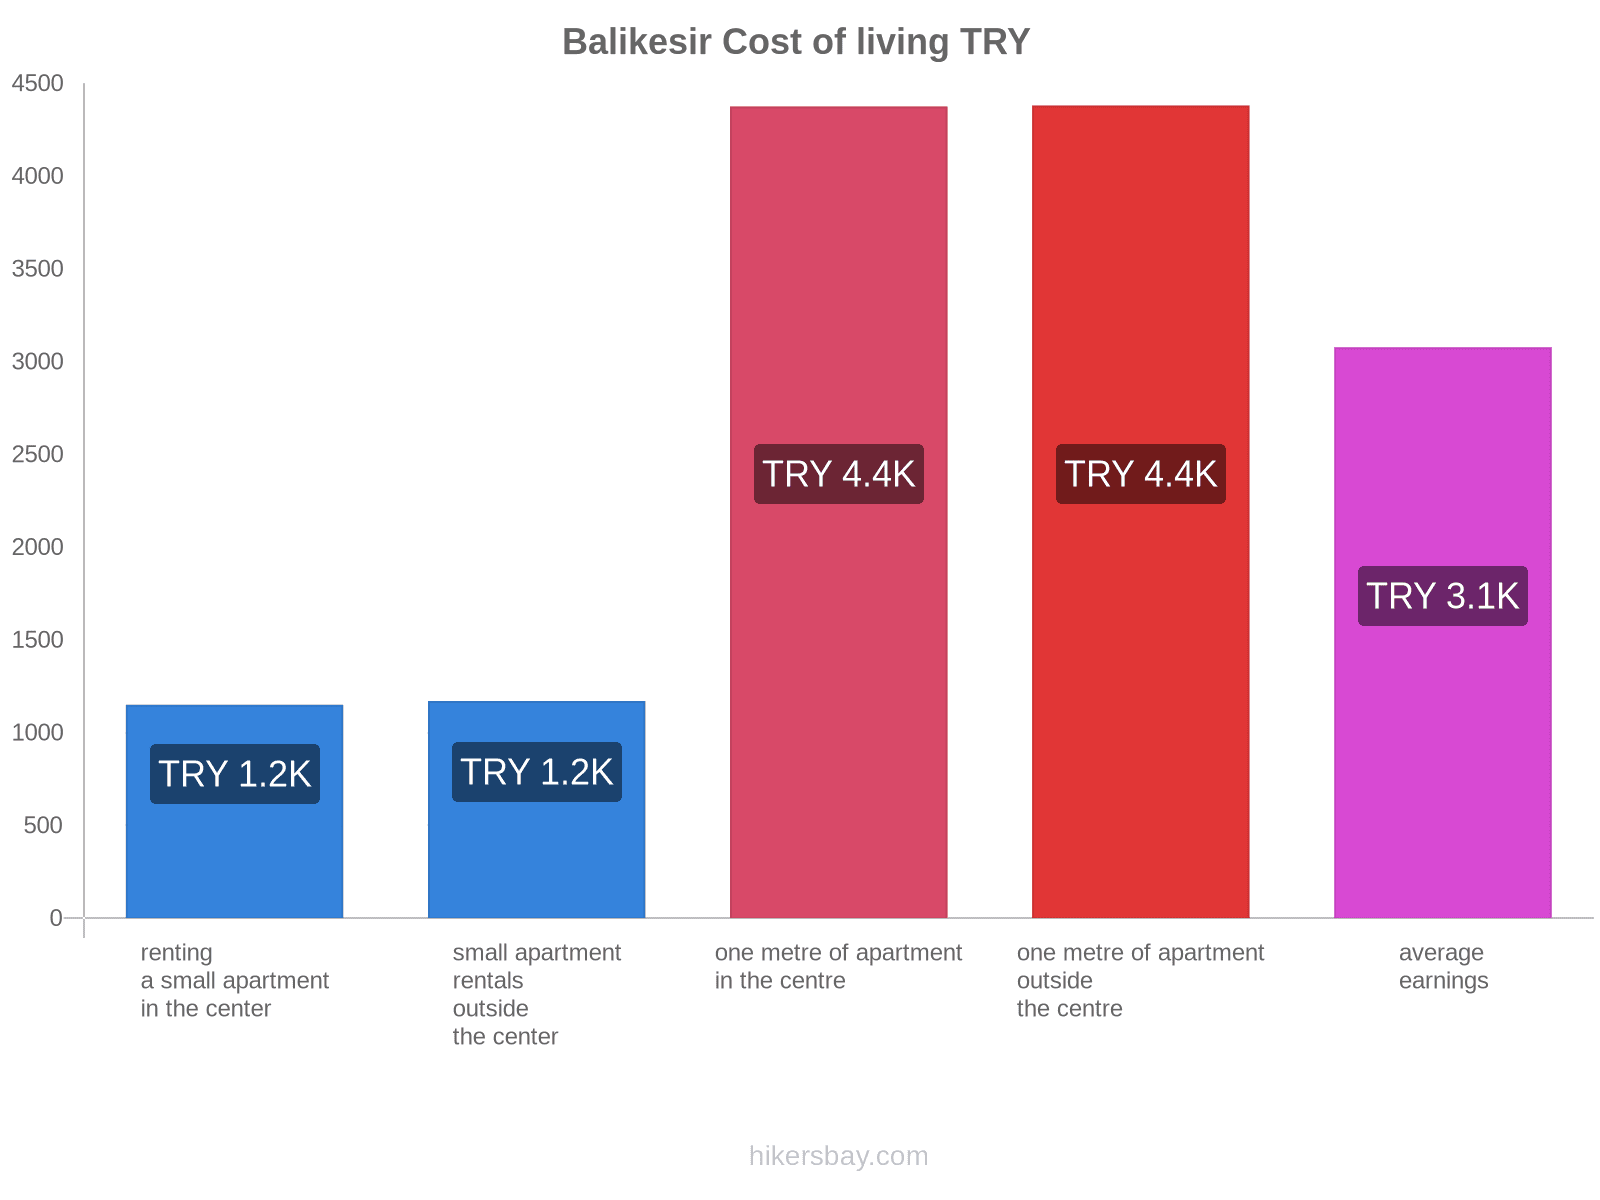 Balikesir cost of living hikersbay.com